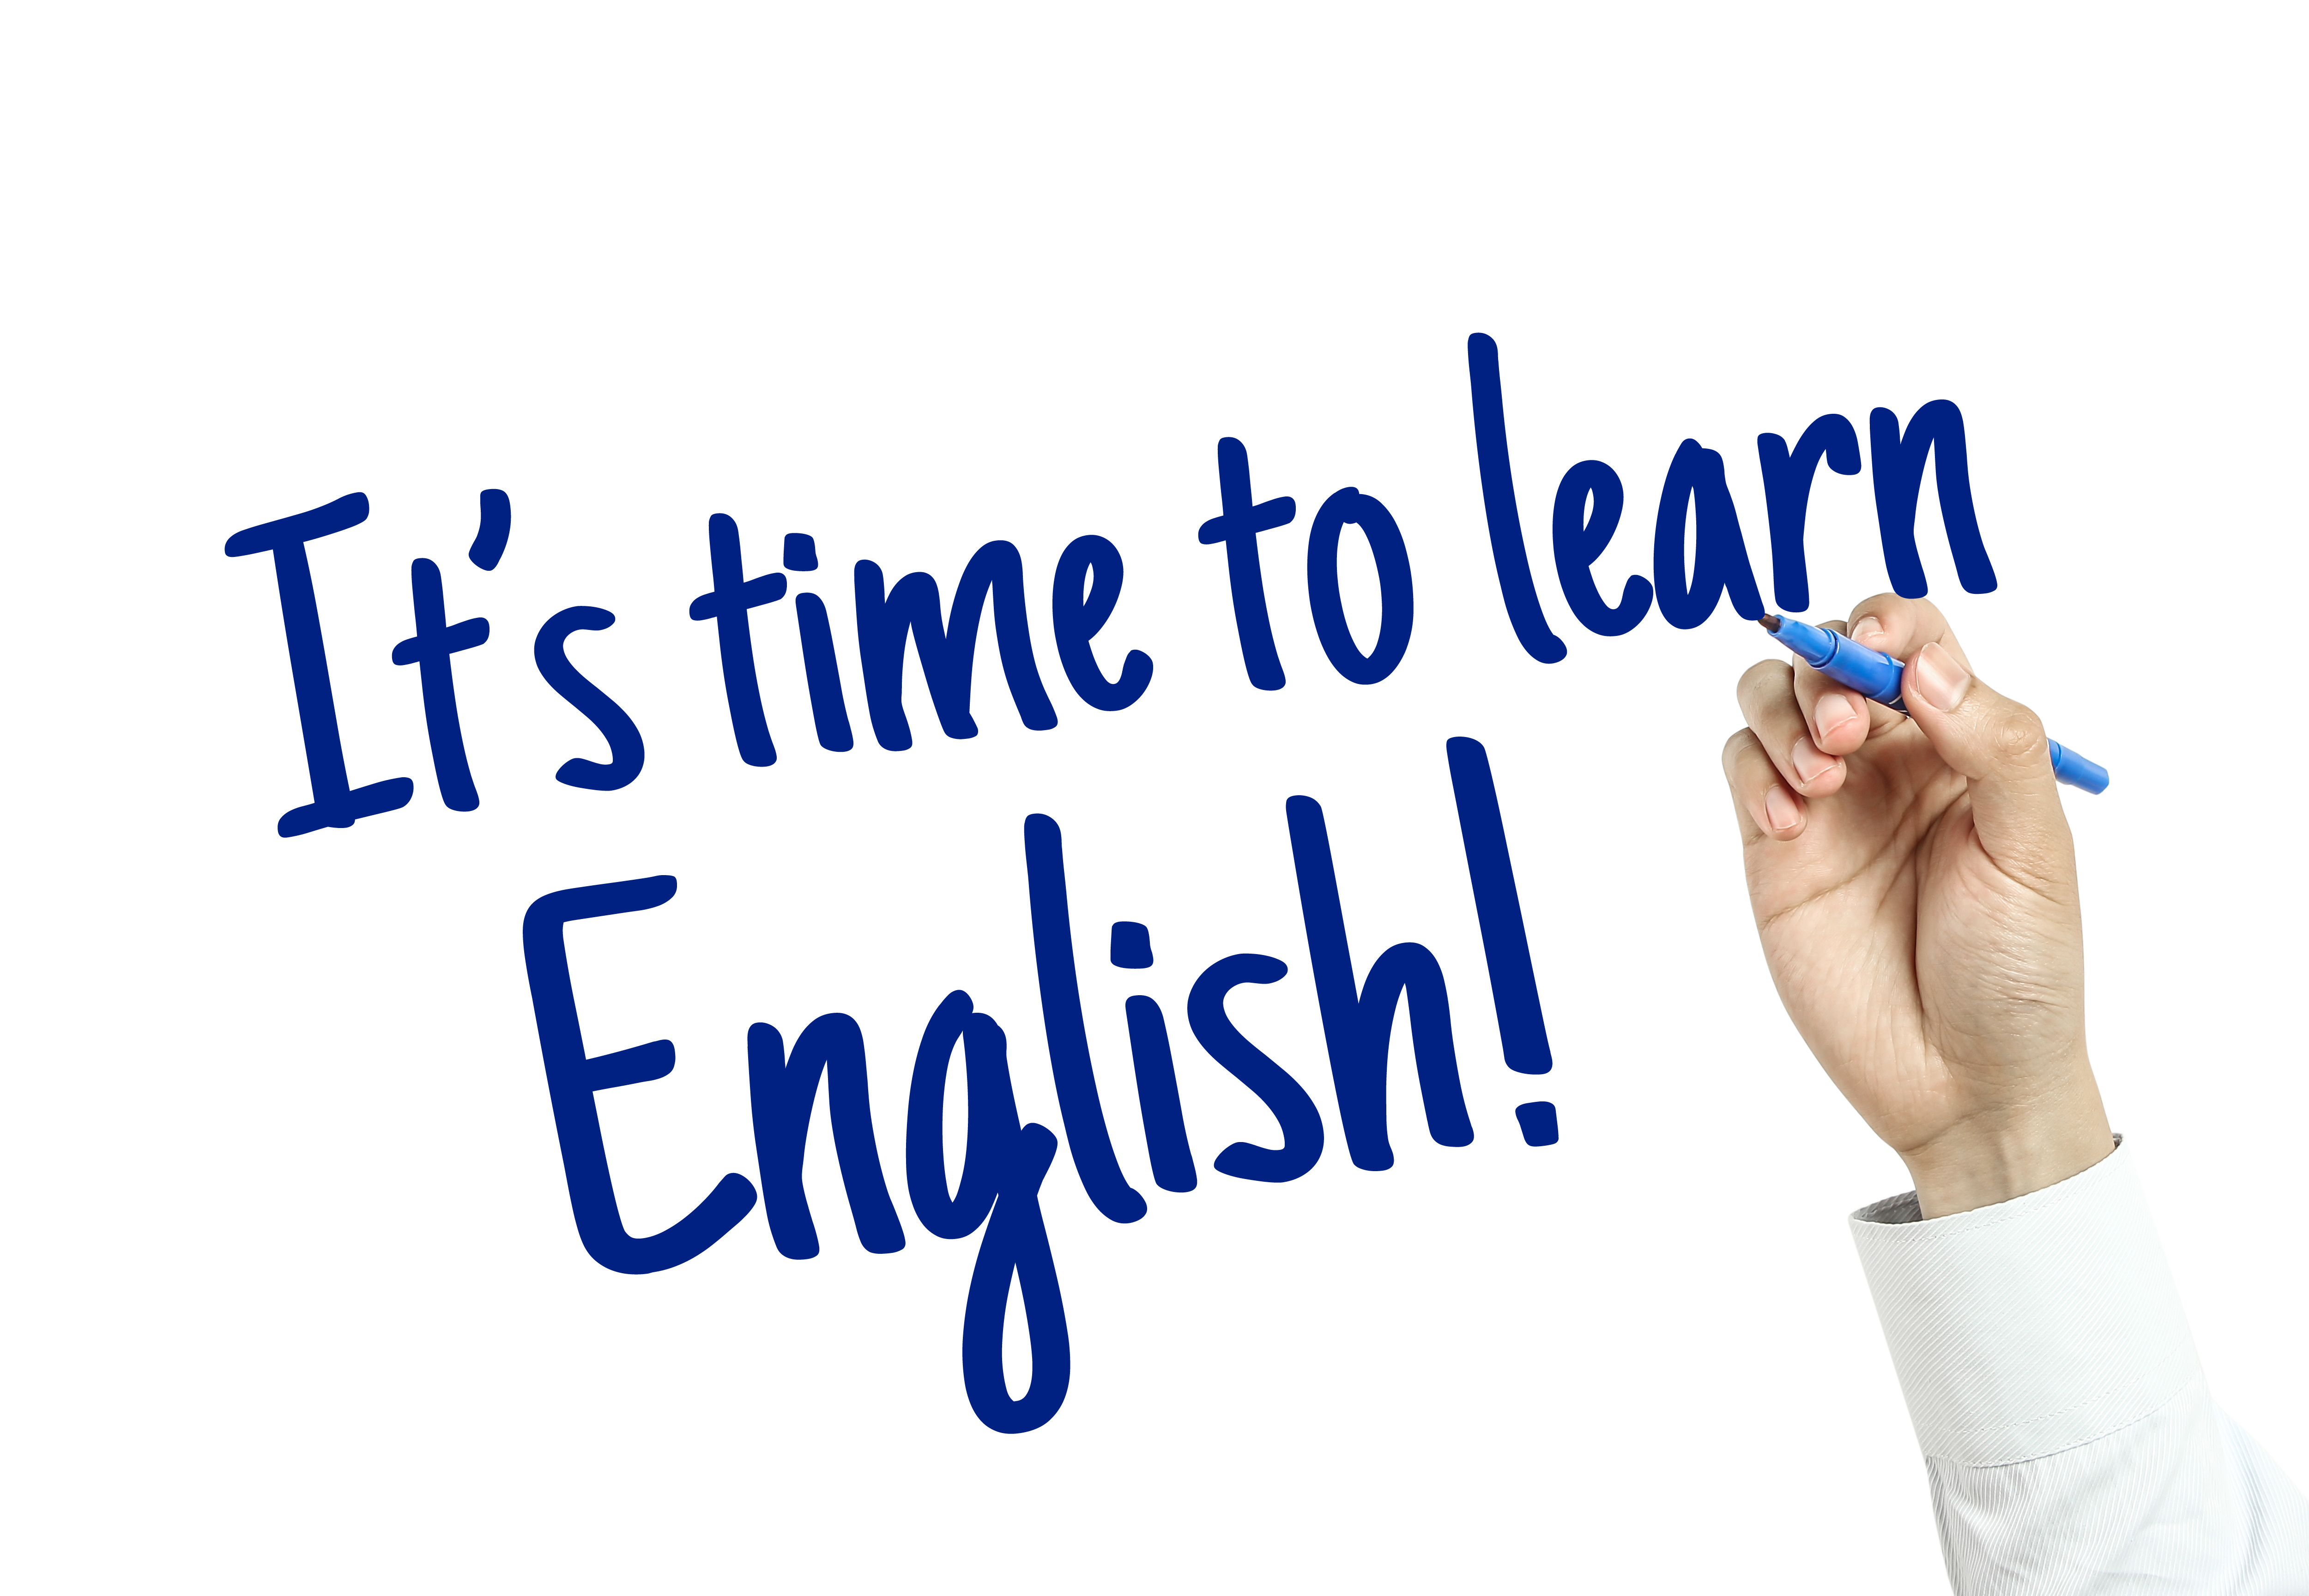 Do you speak english with me. Английский язык в картинках. Учим английский. Английский на прозрачном фоне. Learn English картинки.